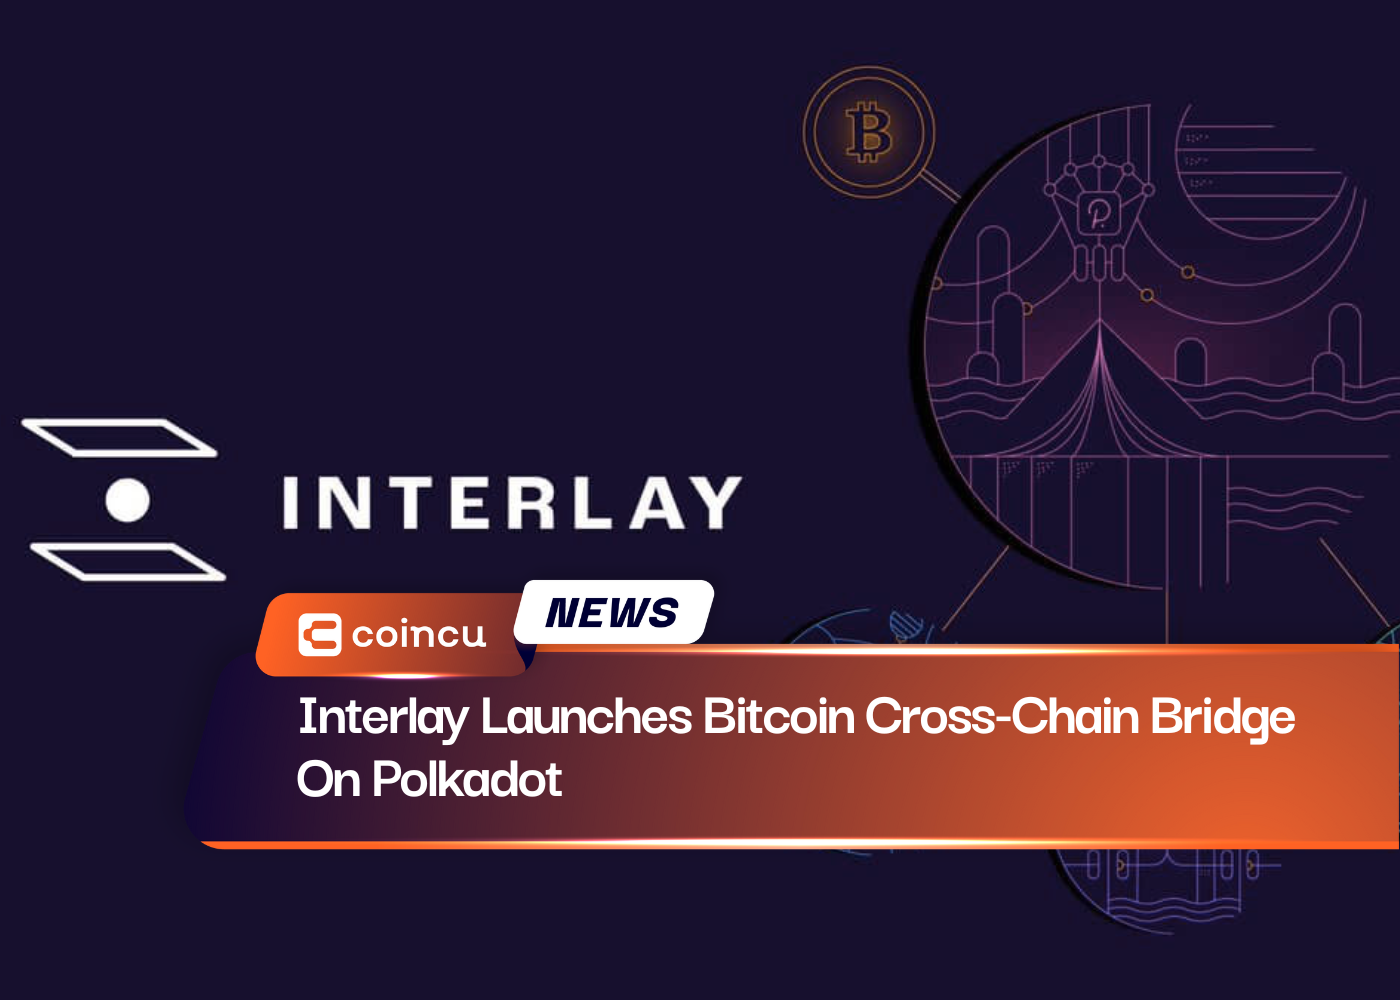 Interlay startet Bitcoin Cross-Chain Bridge auf Polkadot